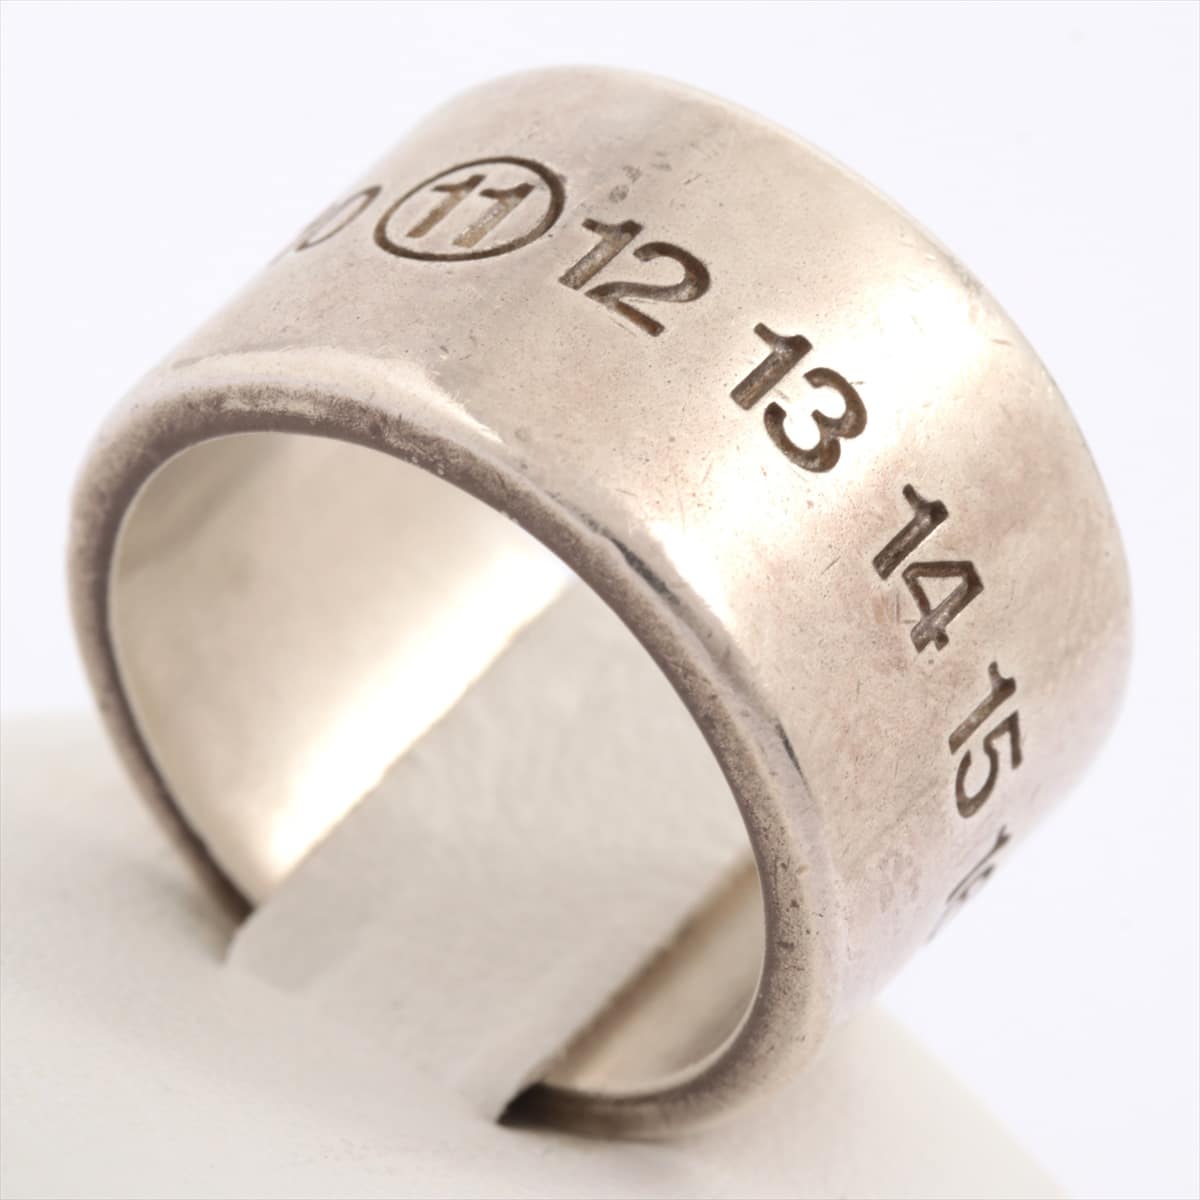 Maison Margiela Calender rings 925 18.4g Silver